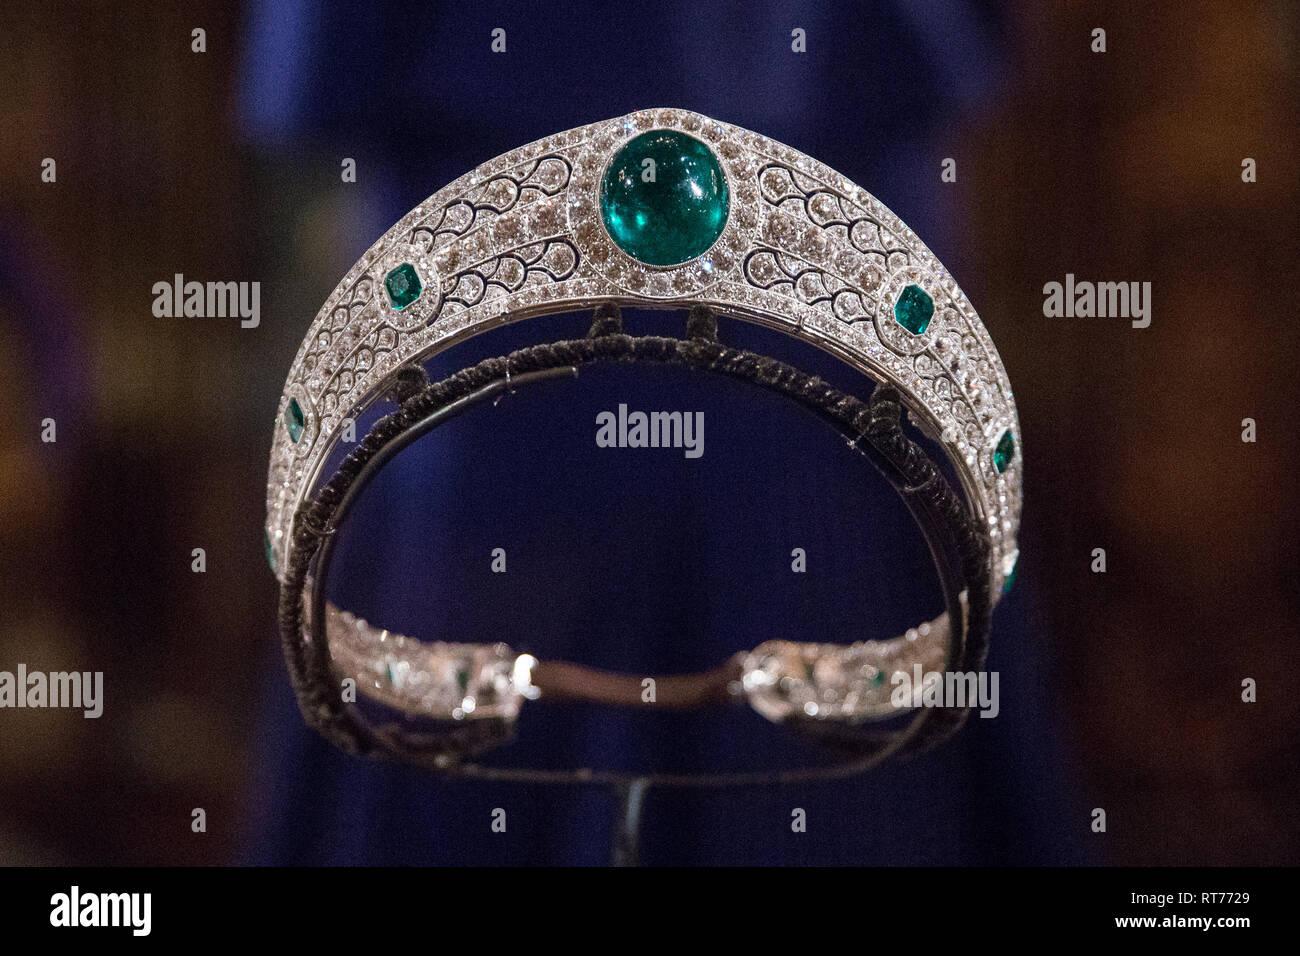 Queen kokoshnik tiara hi-res stock photography and images - Alamy